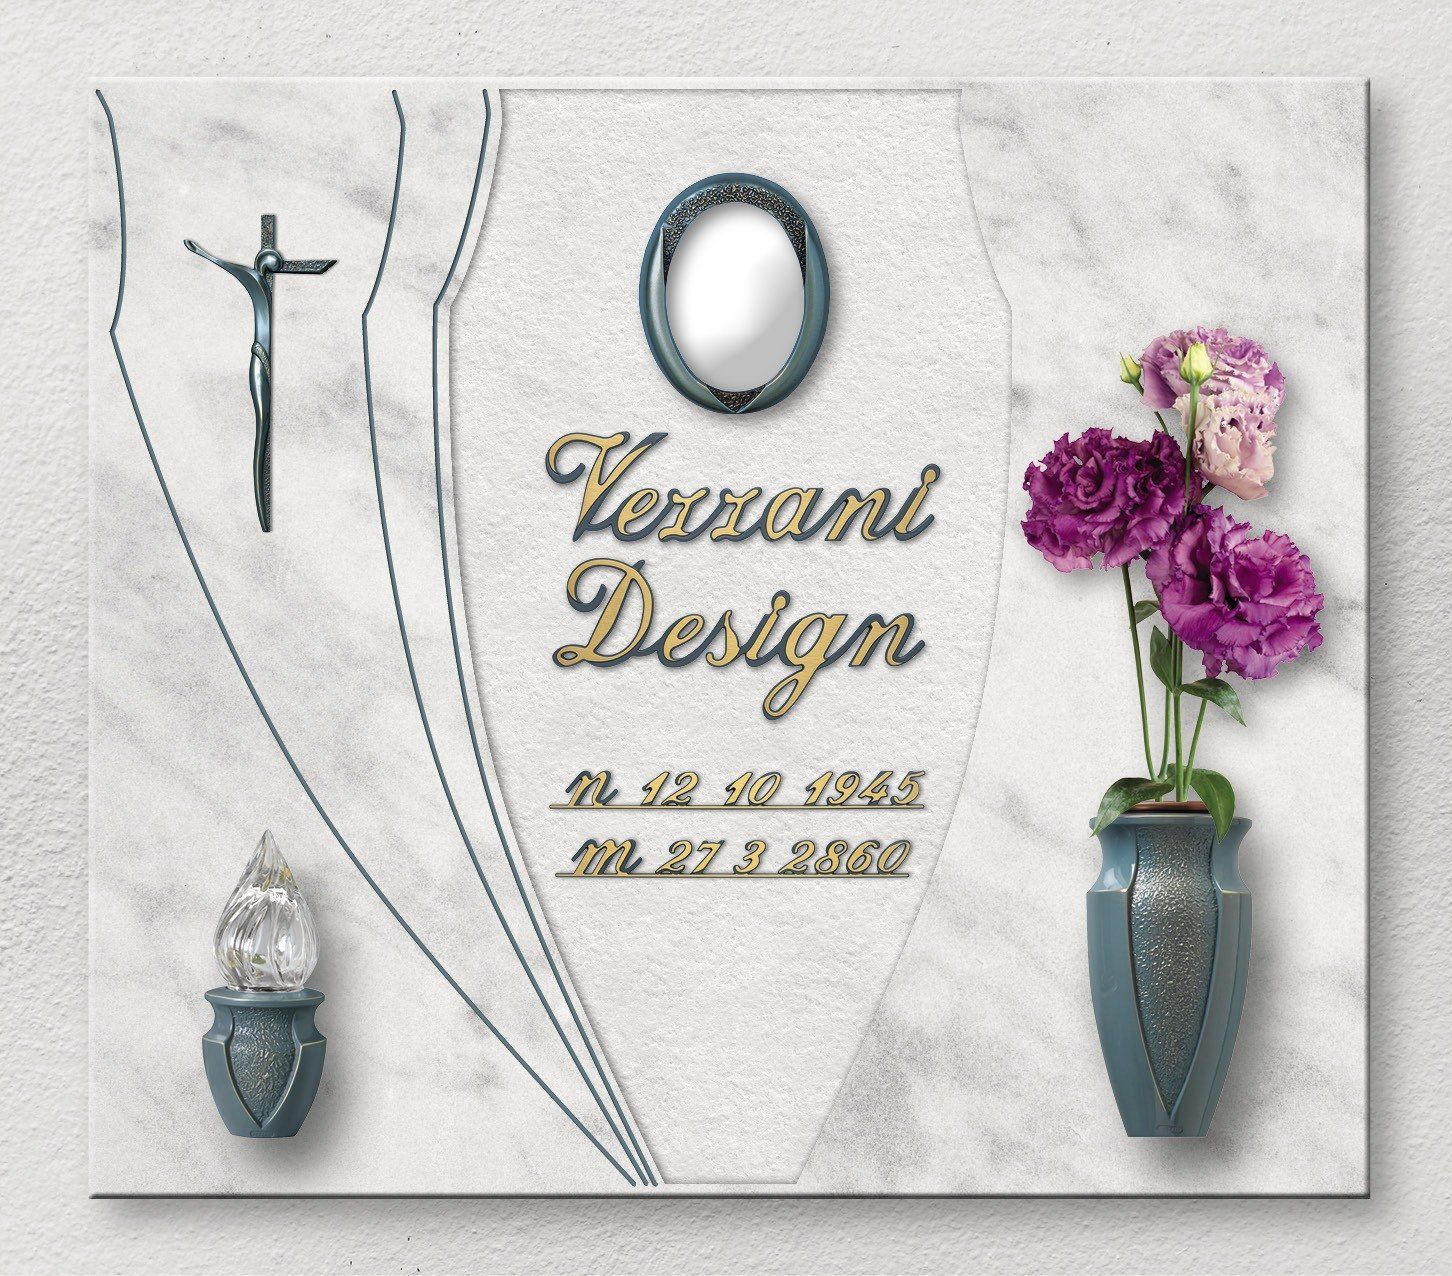 Niche with personalized engraving vezzani design 16